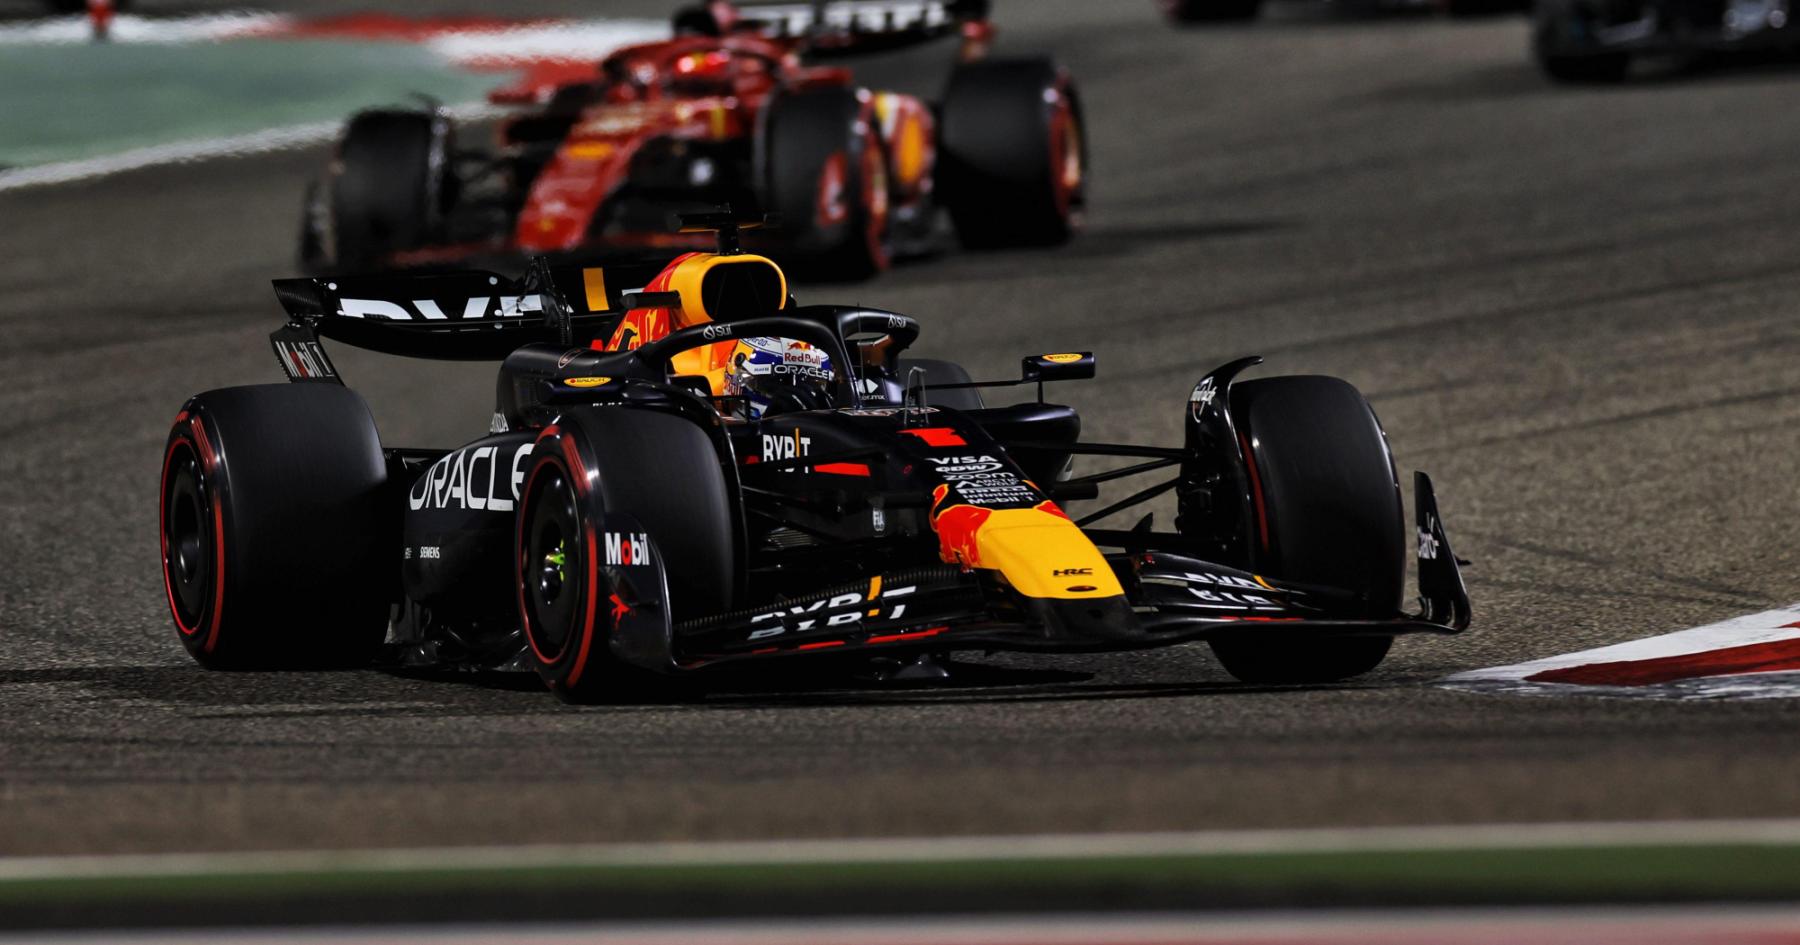 The Ultimate Racing Dream Team: Verstappen, Hamilton, and Ferrari in Newey's Sights